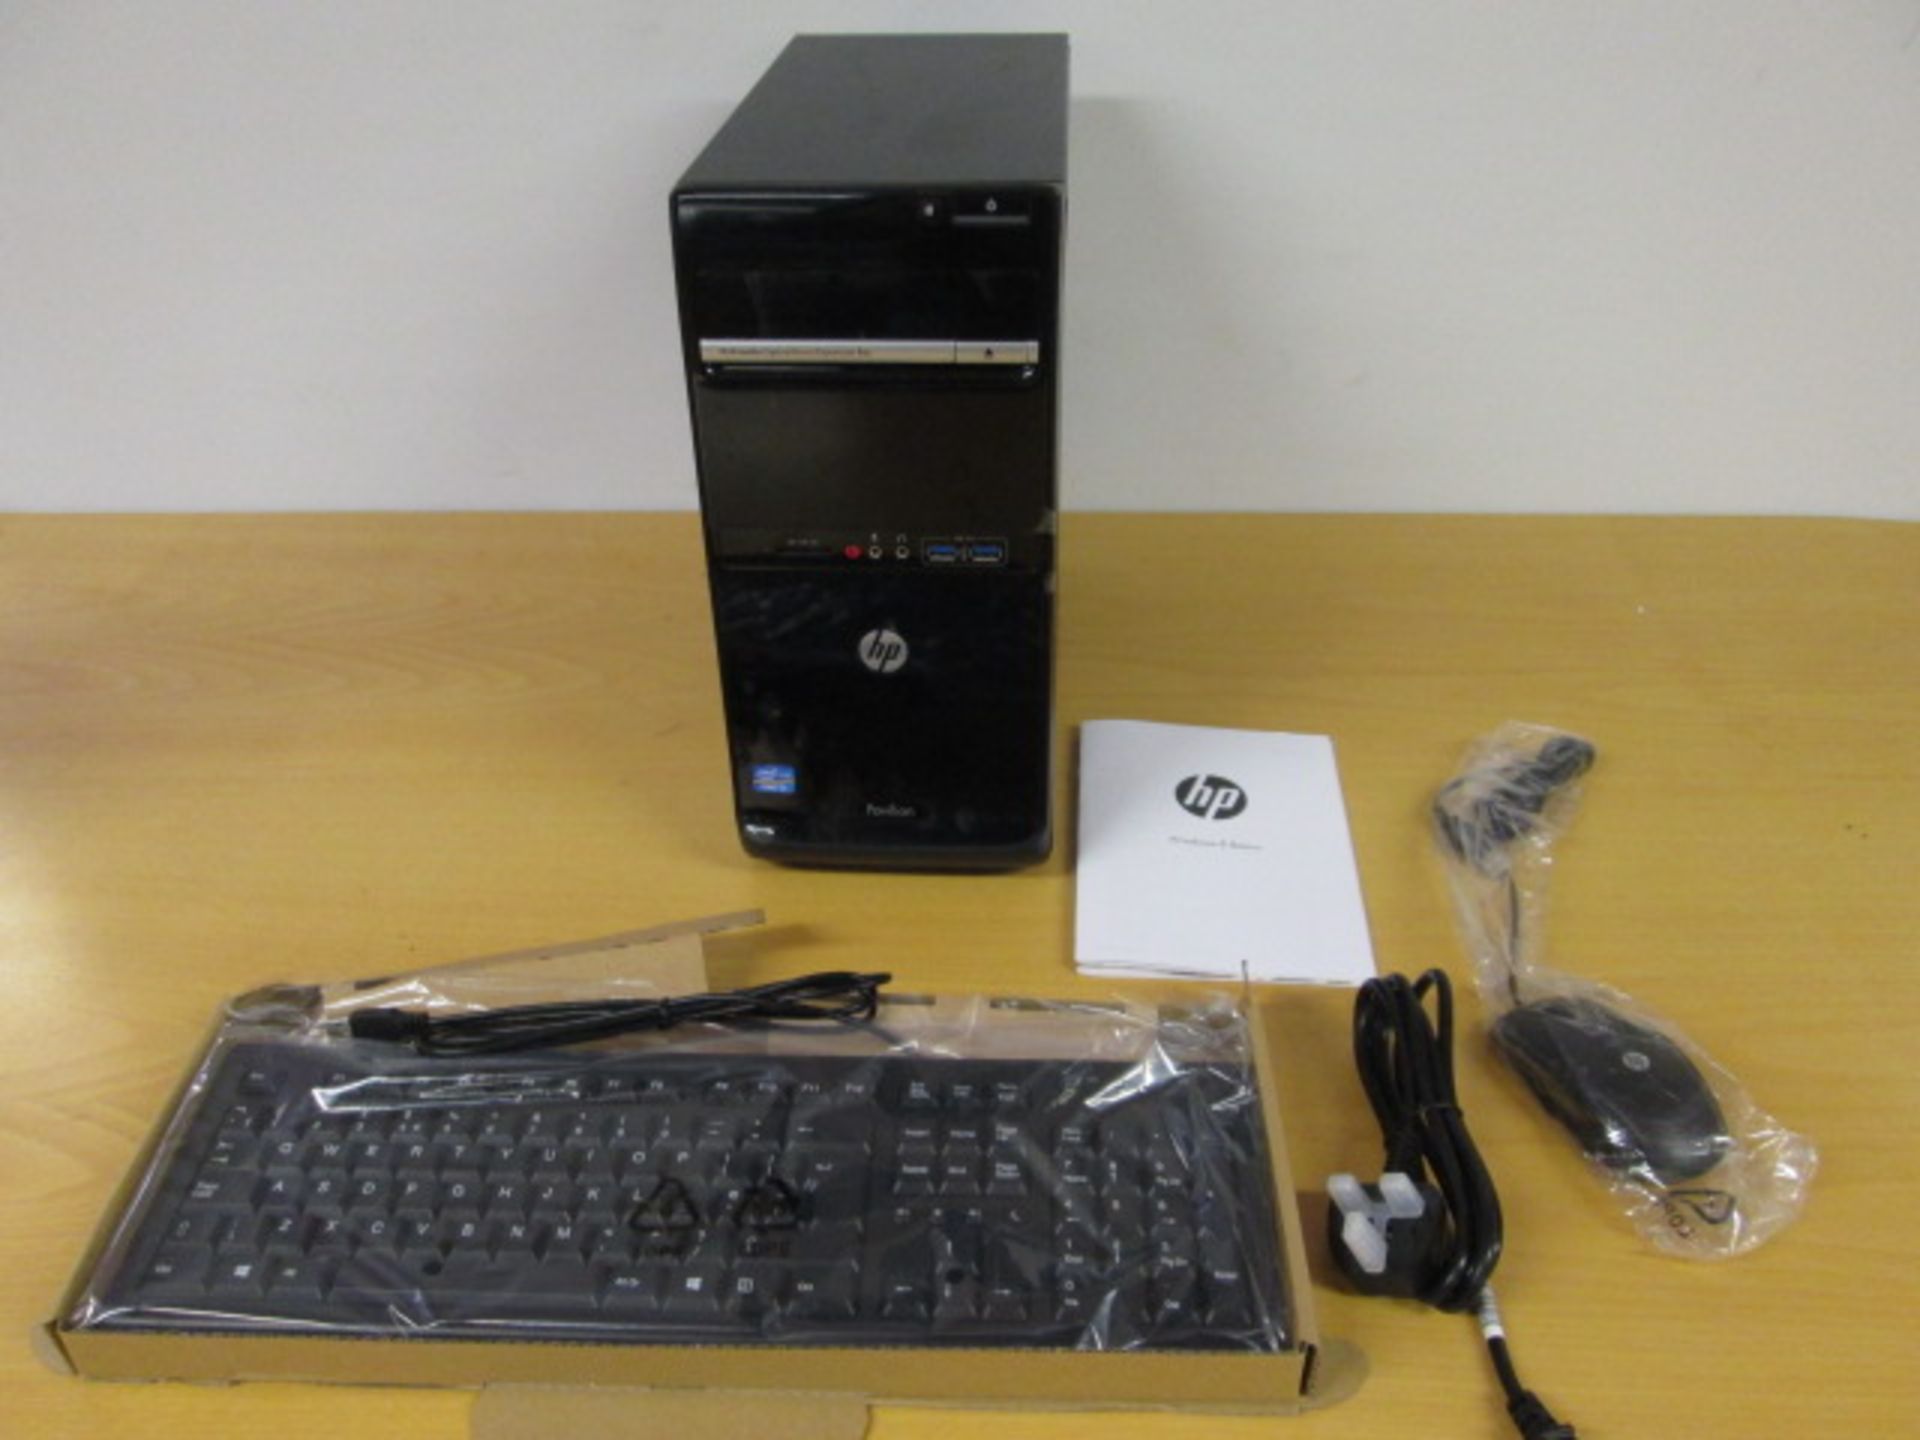 HP Pavilion P6 Series PC, Model P6-2370ea, Product Number C3T68EAABU, Serial Number CZC2408NZ6,